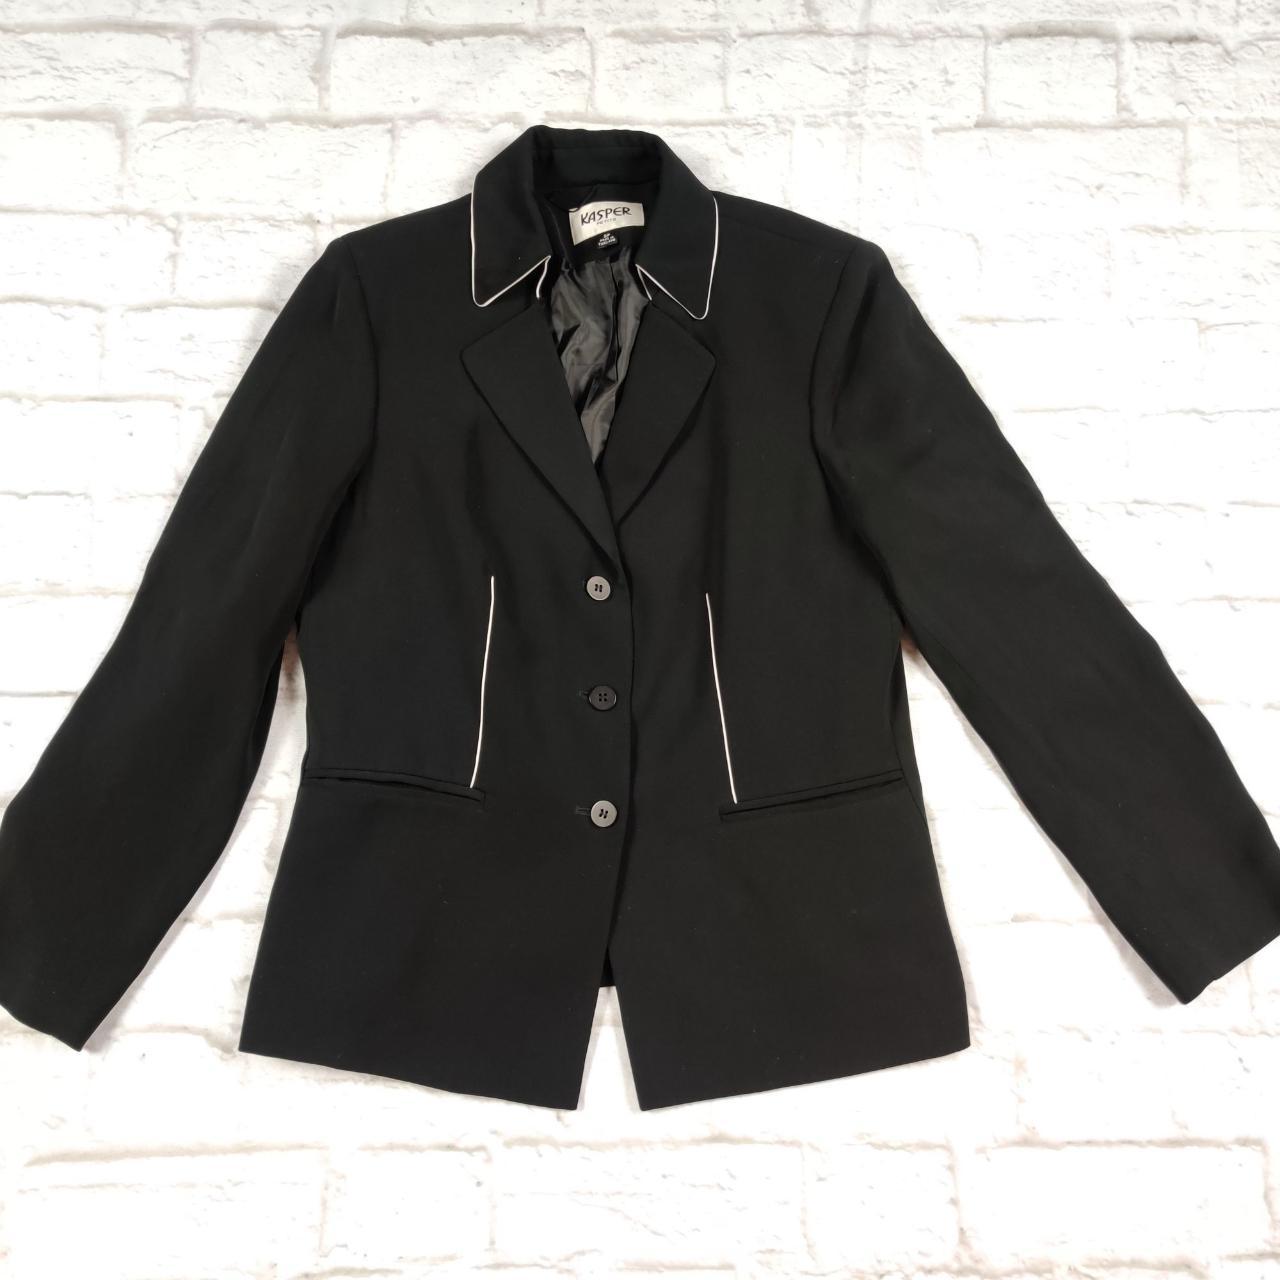 Features:, • KASPER blazer jacket, • Black with